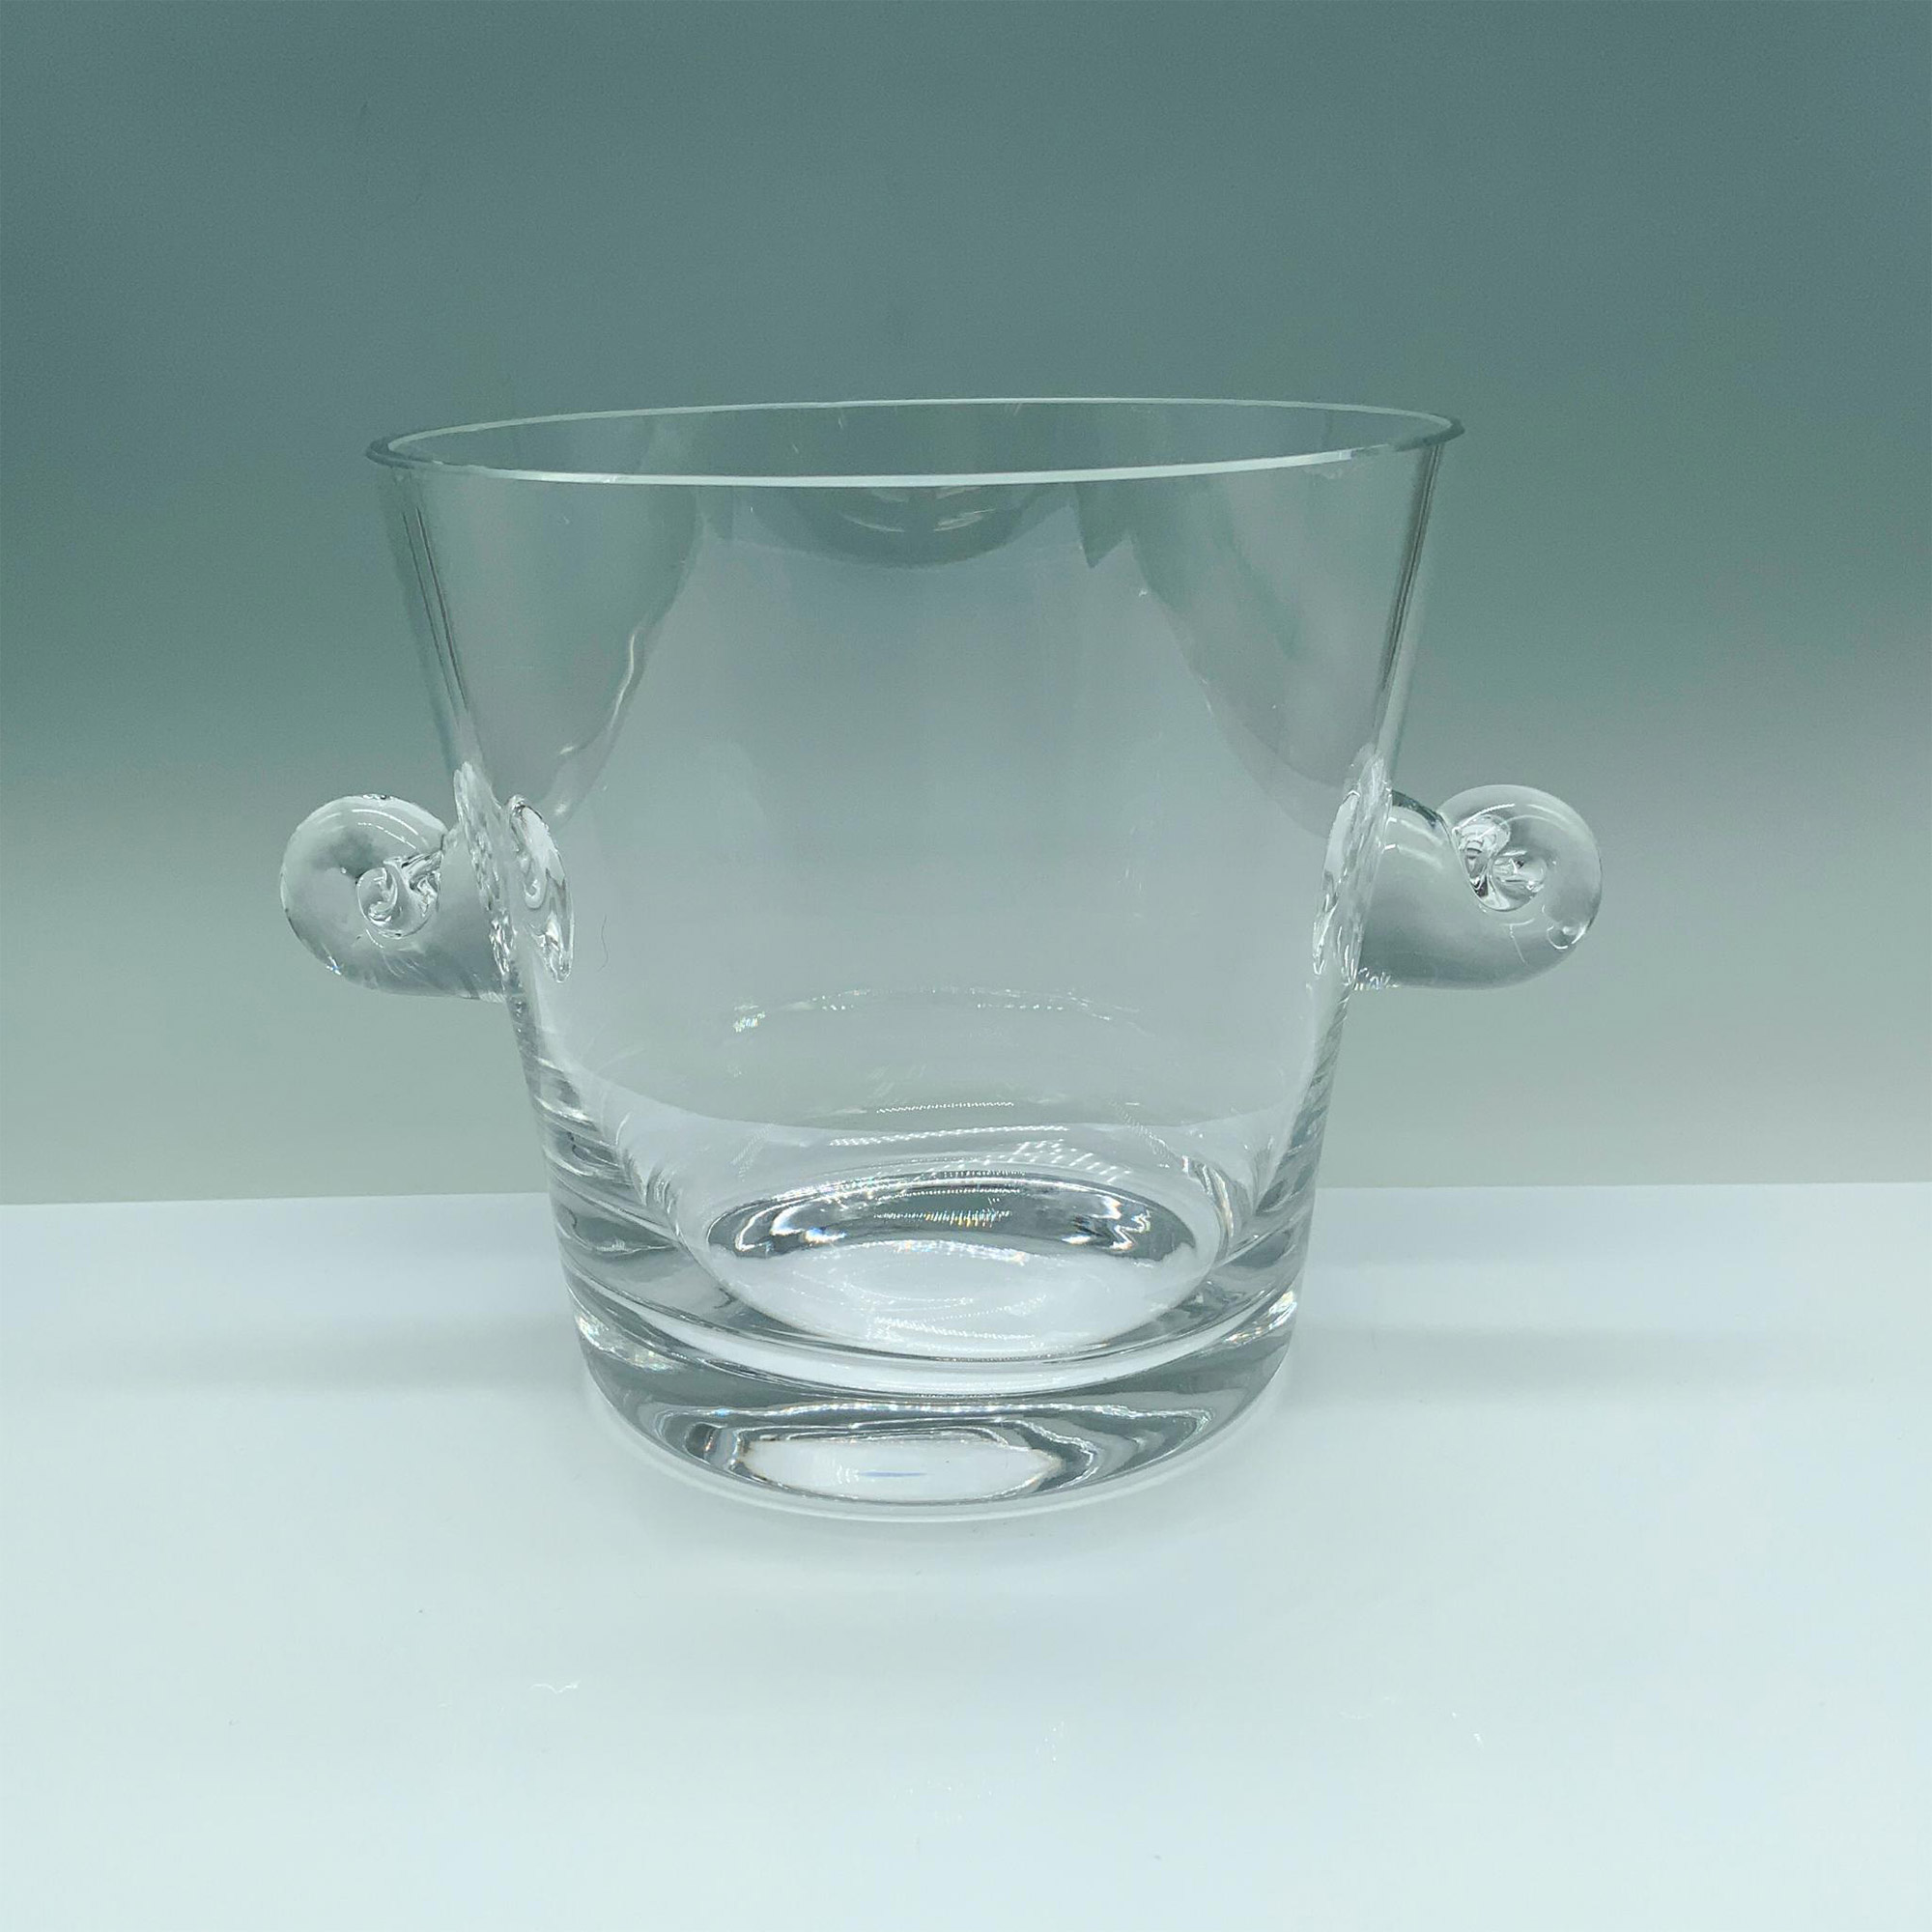 Vintage Tiffany & Co. Crystal Glass Ice Bucket - Image 2 of 4